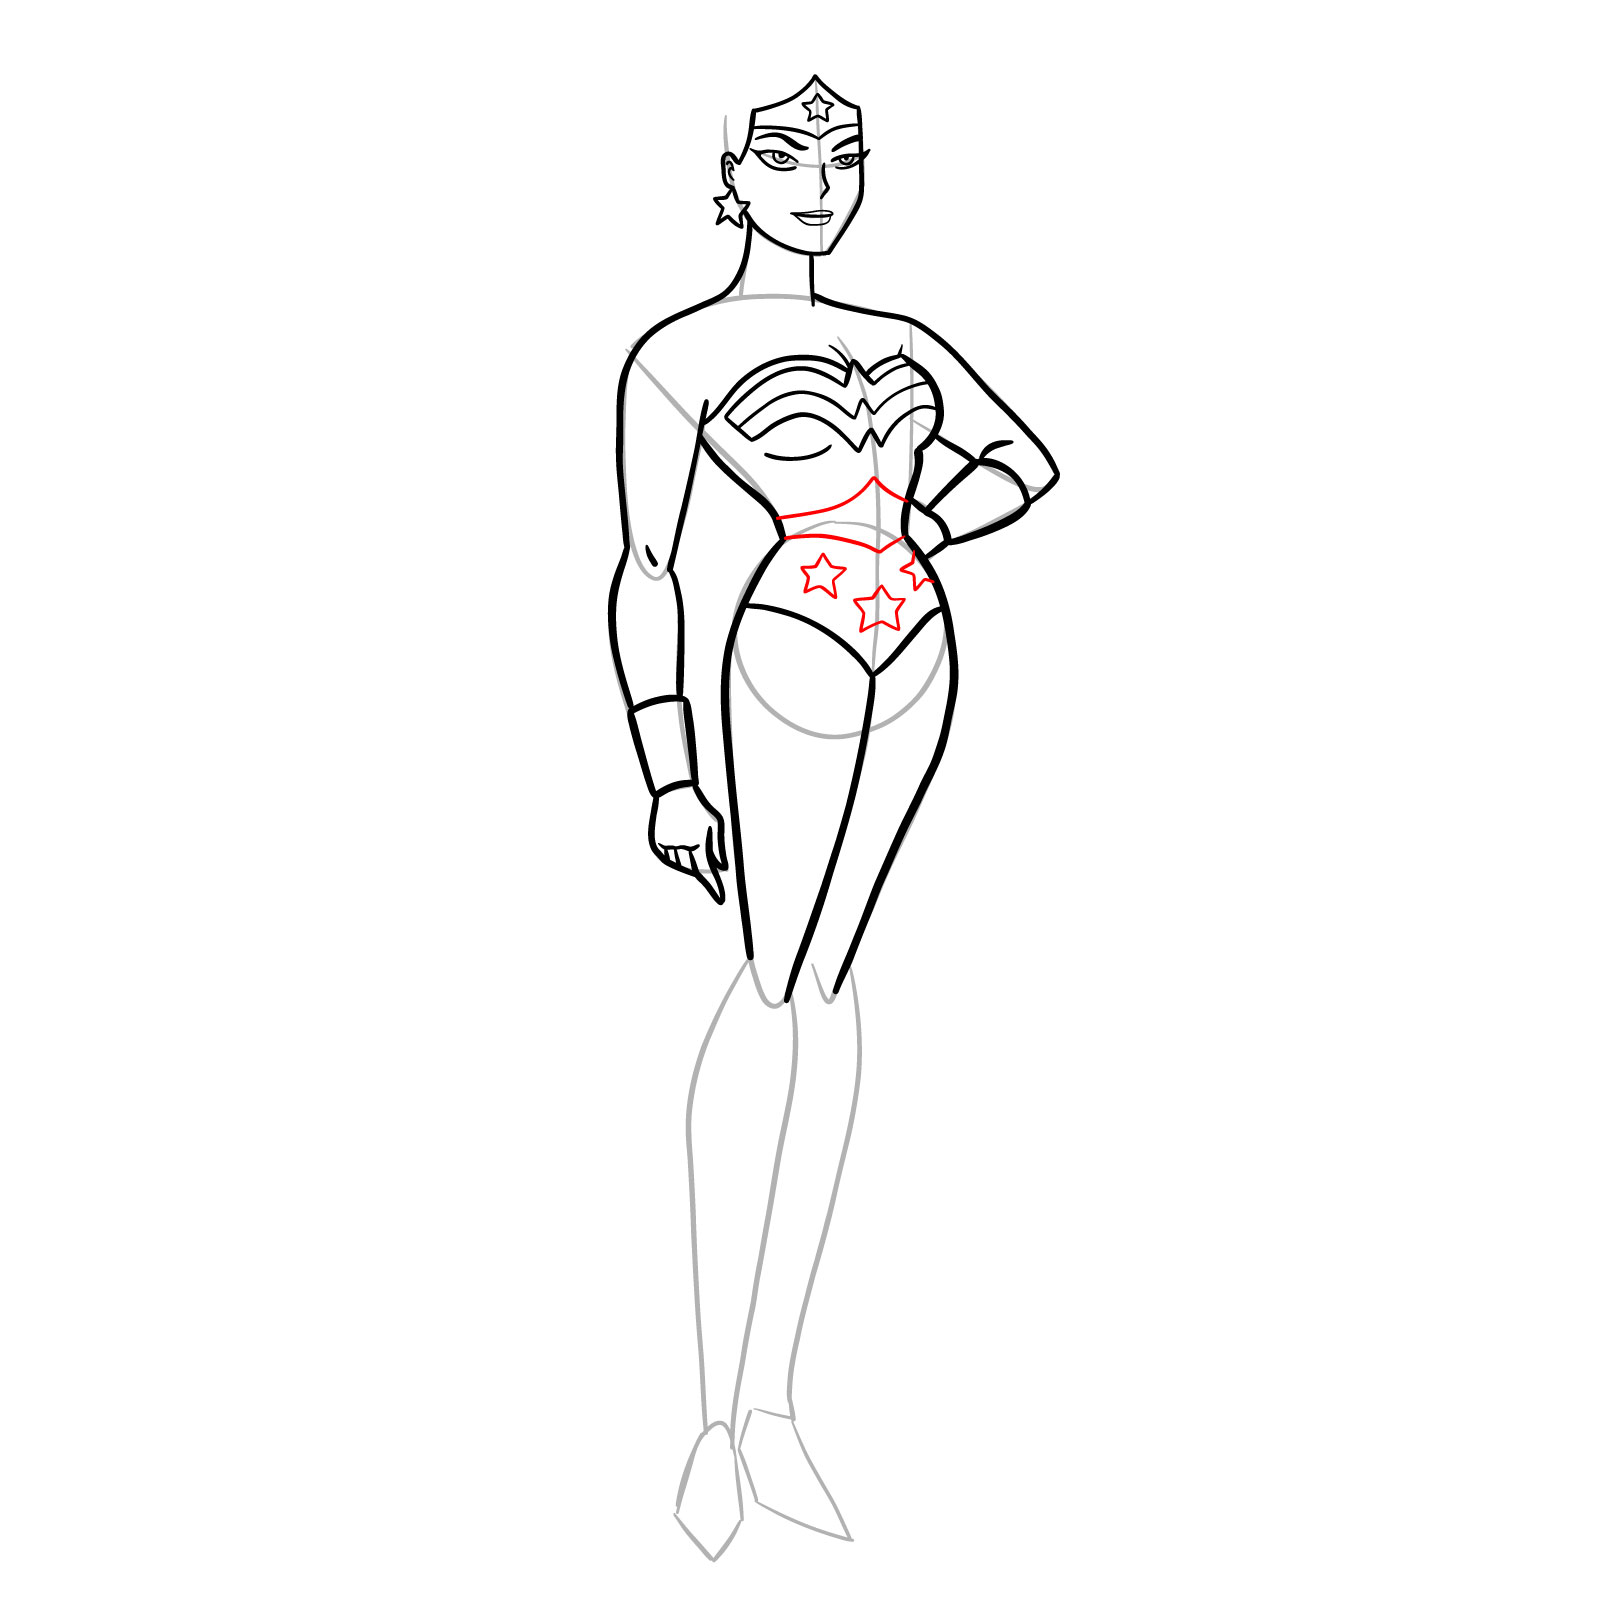 How to draw Wonder Woman cartoon style - step 23